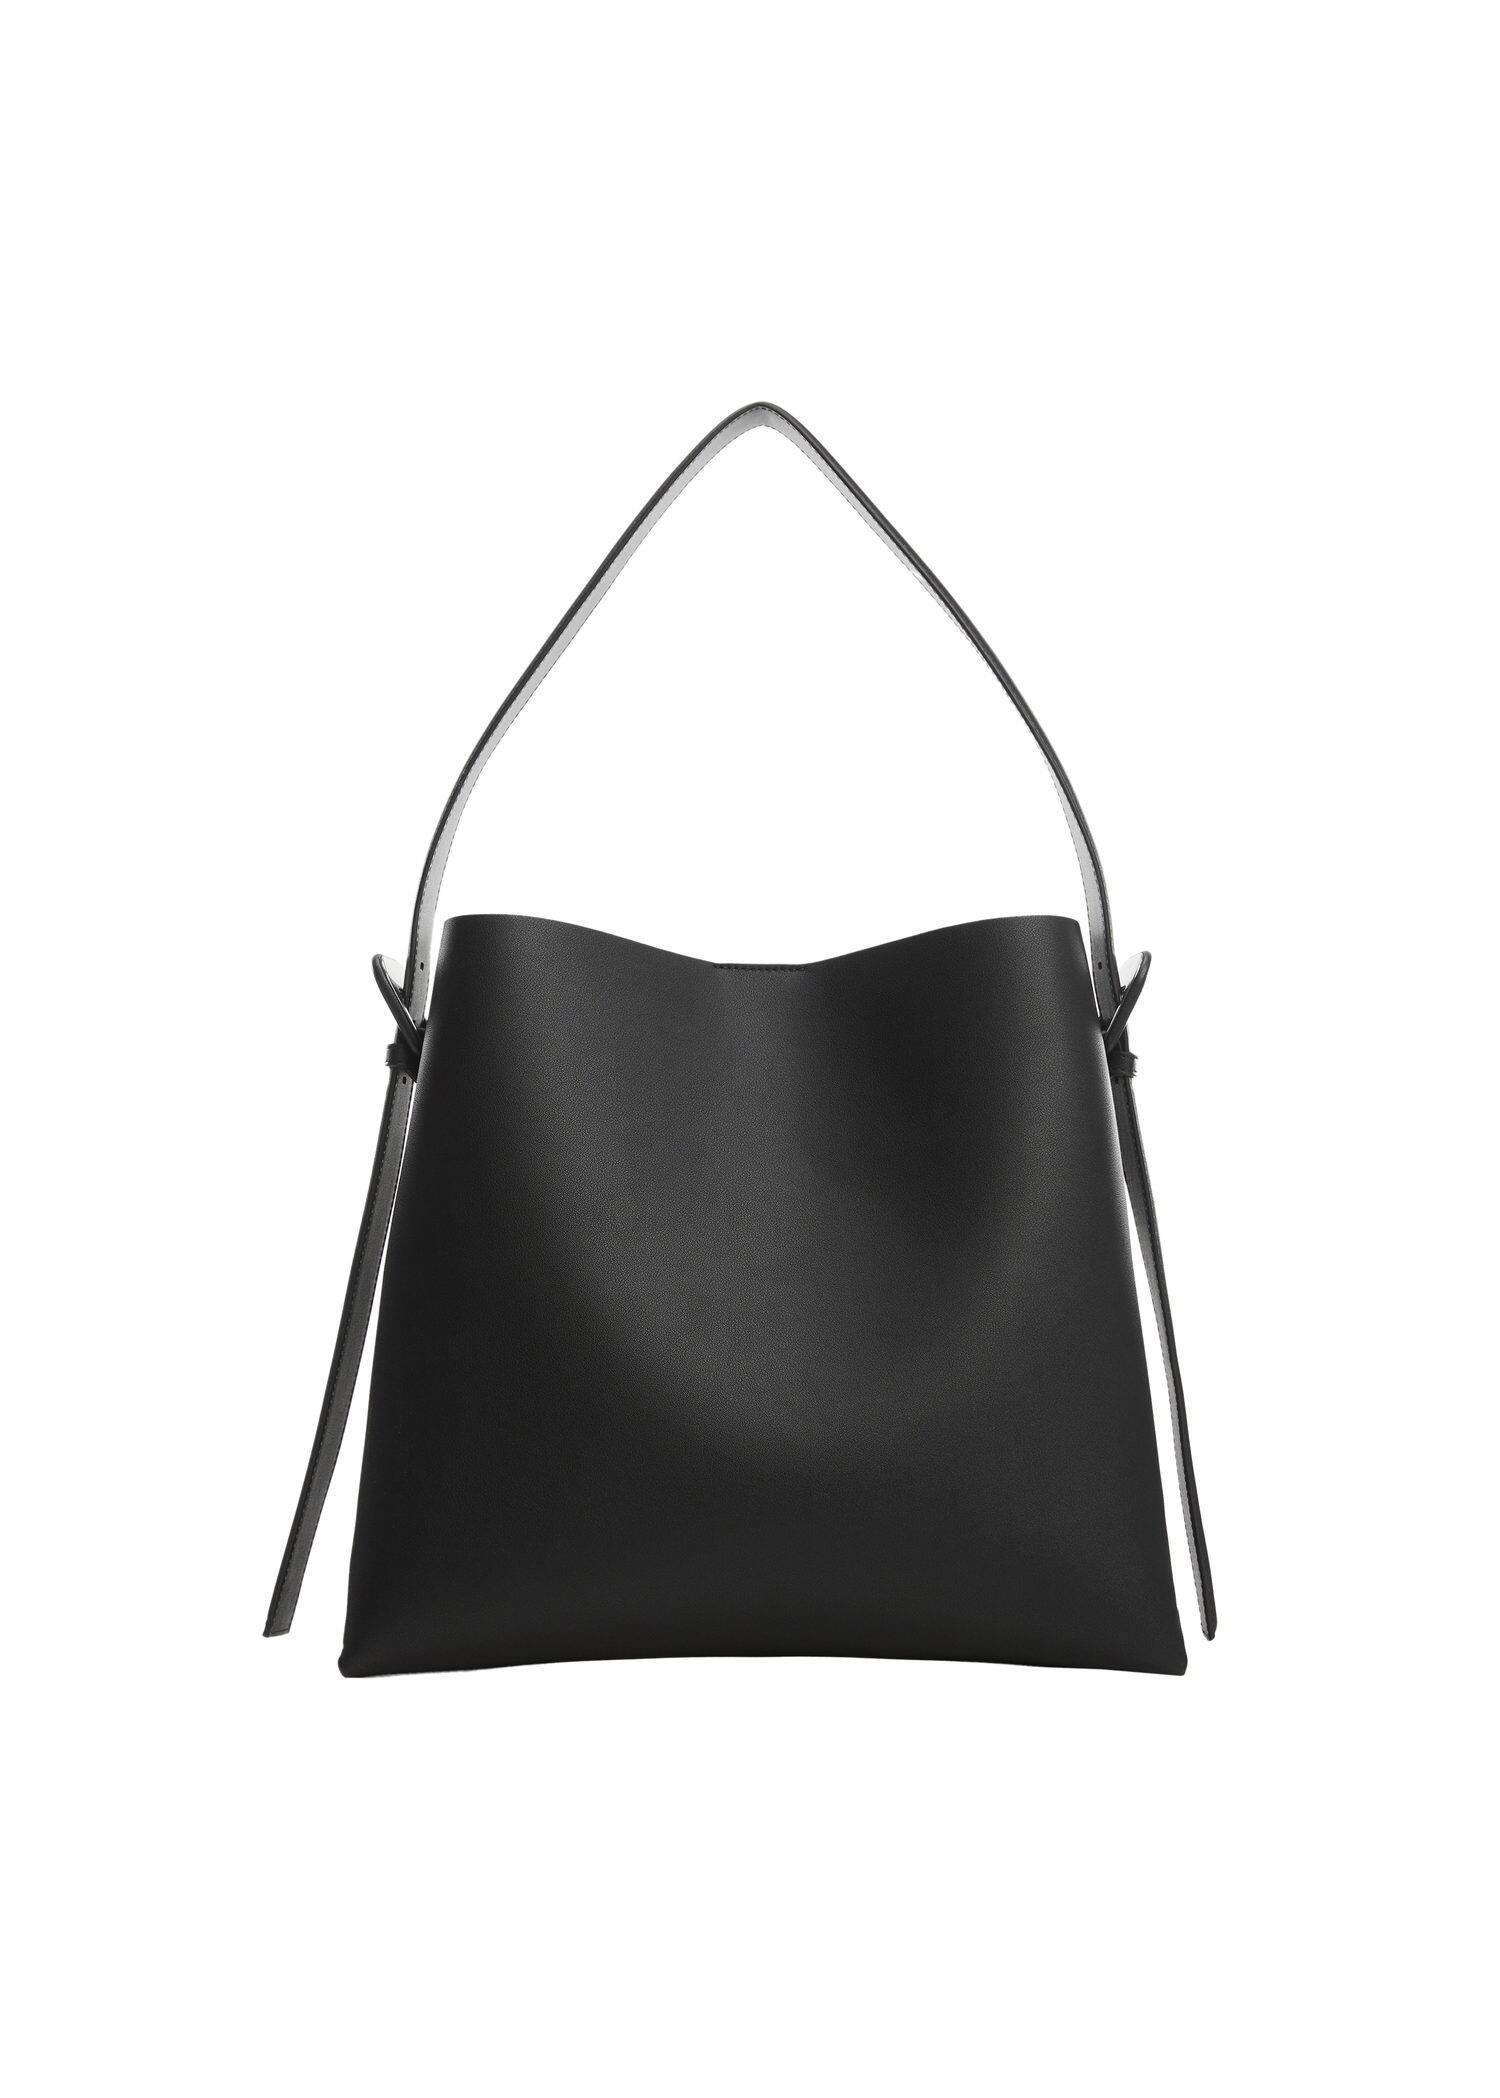 Mango - Black Buckled Shopper Bag